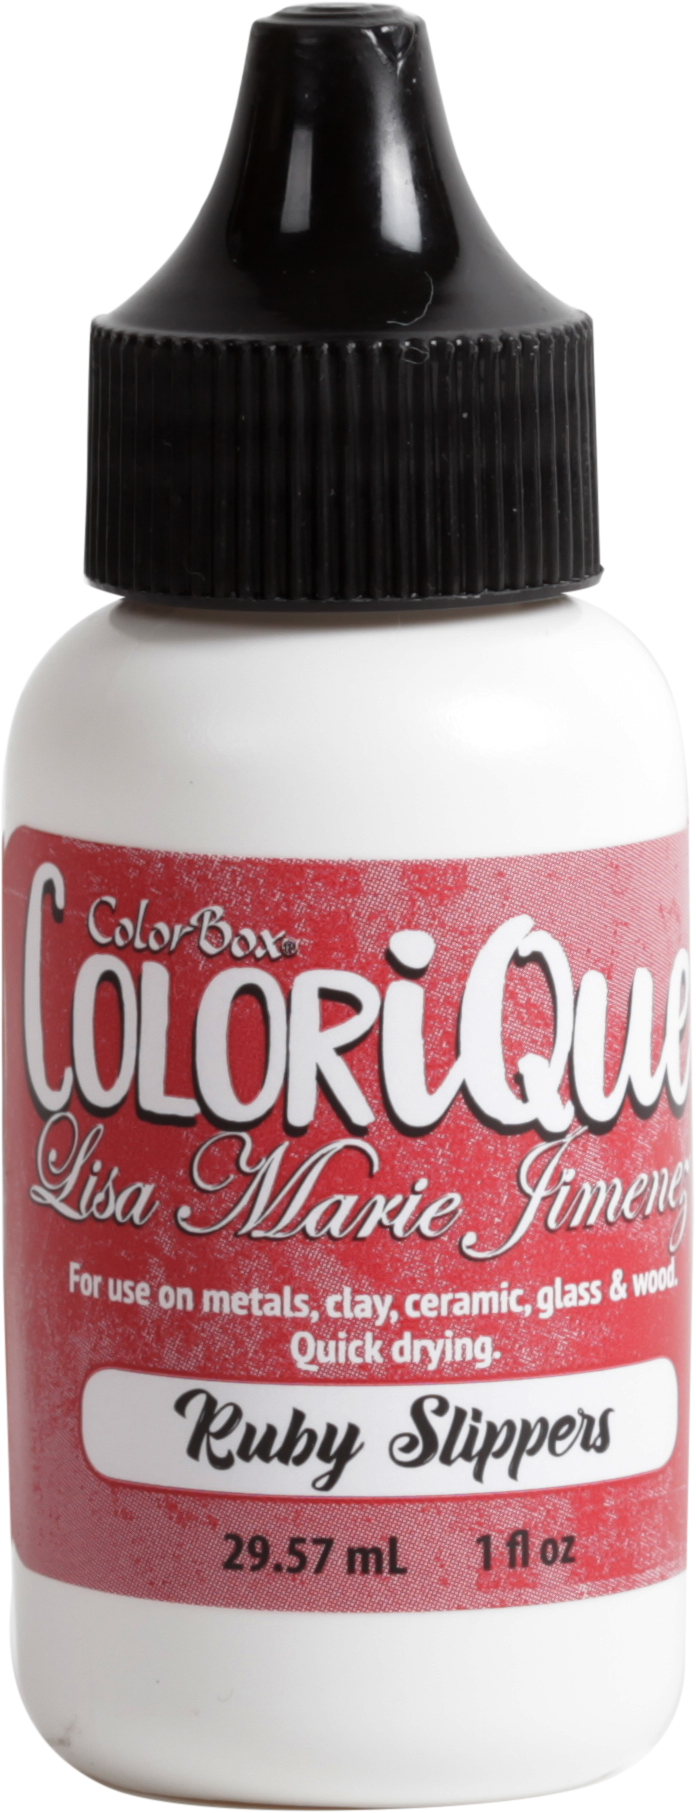 Colorbox Colorique Lisa Marie Jimenez 1oz Ruby Slippers - image 3 of 3